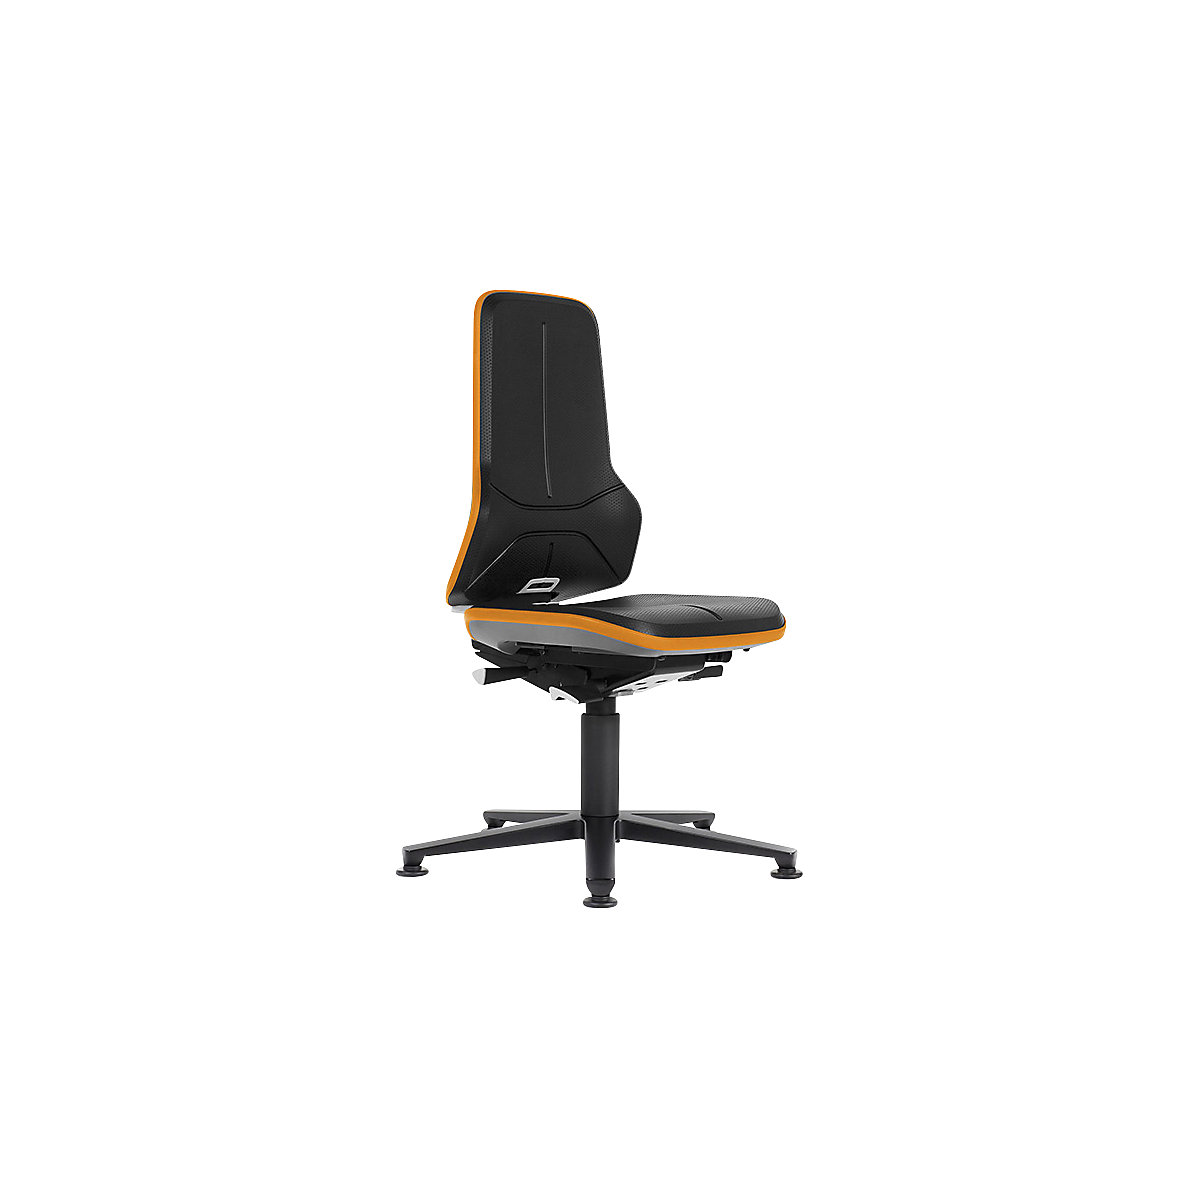 NEON industrial swivel chair swivel chair, floor glides - bimos